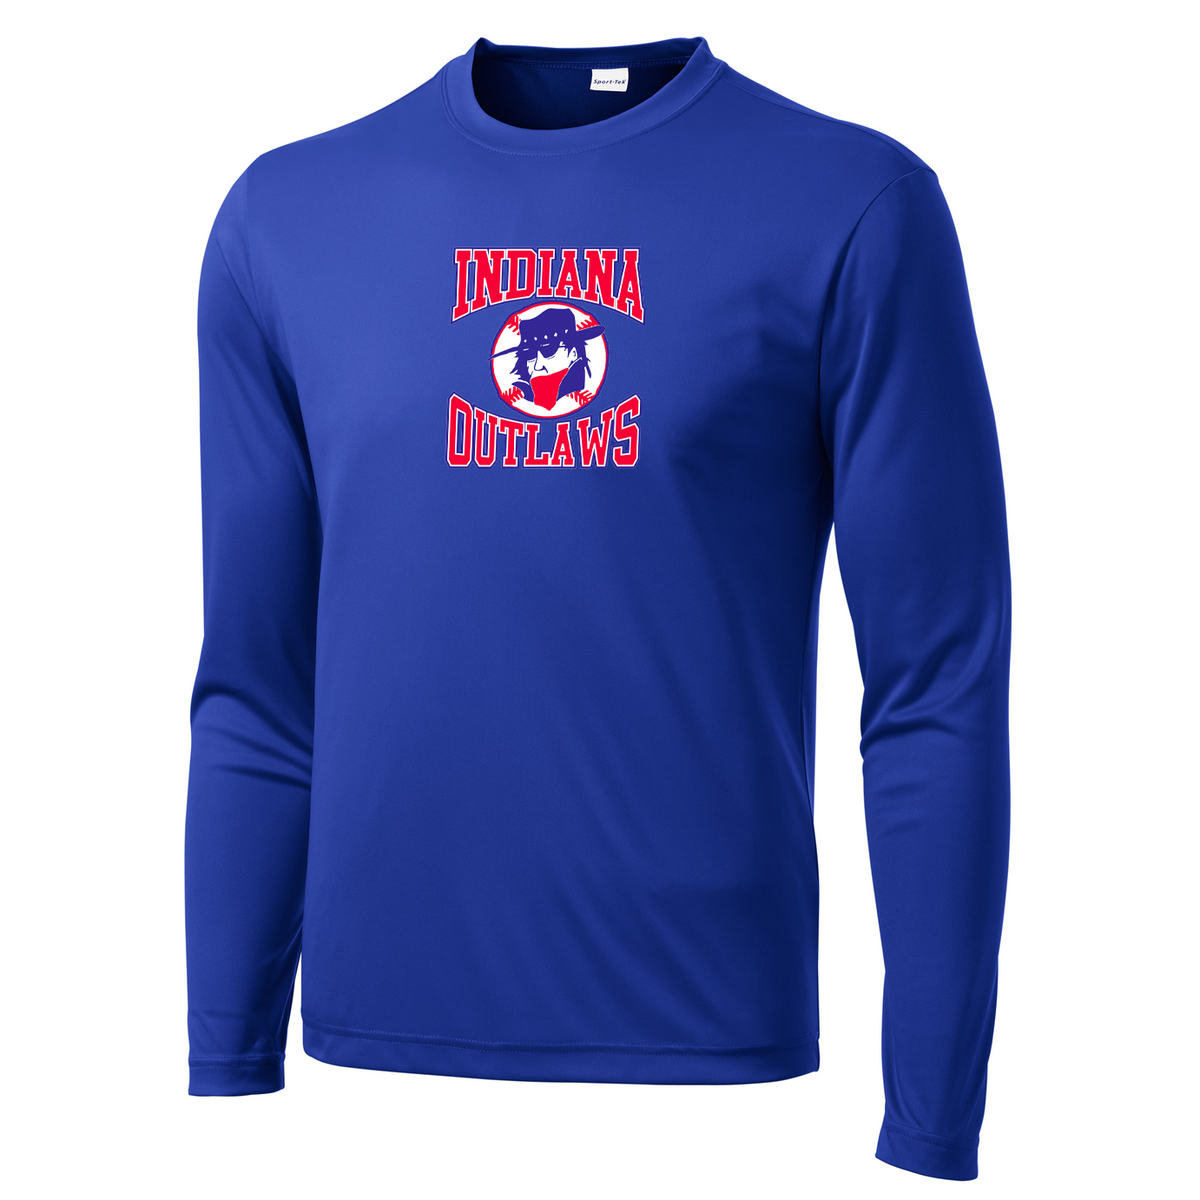 Southern Indiana Outlaws Baseball Long Sleeve Performance Shirt